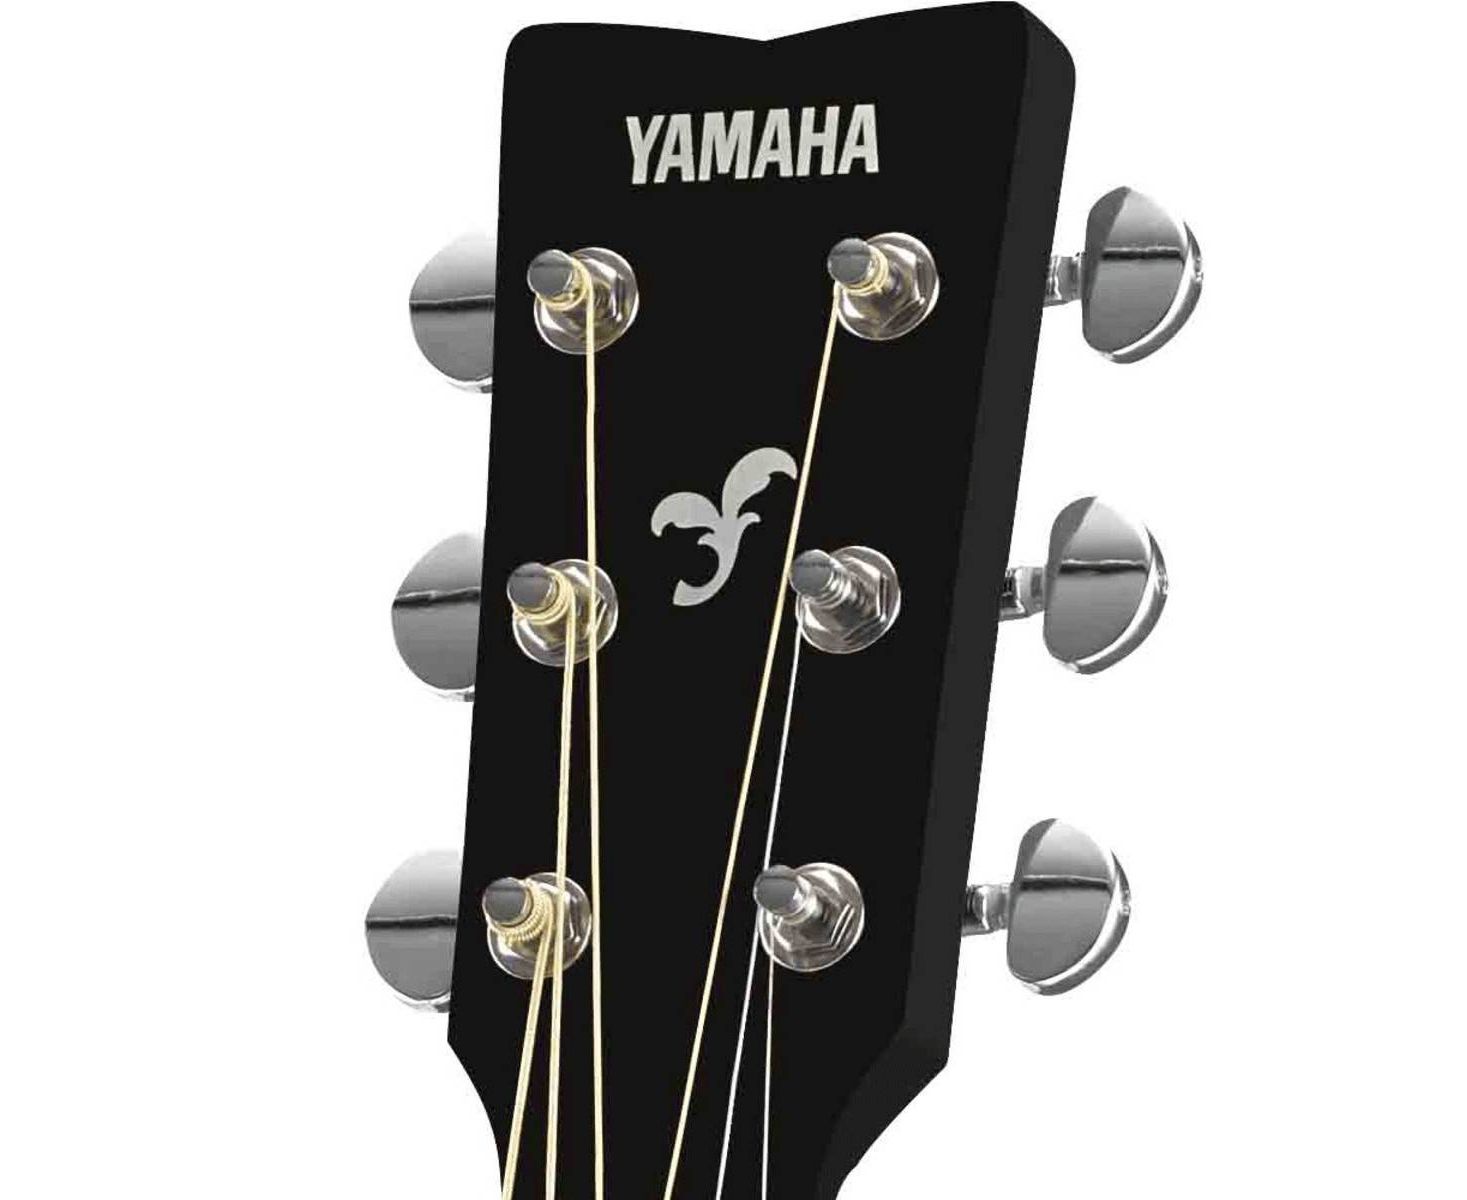 Yamaha natural. Гитара Yamaha fs800. Yamaha fg800 natural. Гитара Yamaha fg800. Yamaha fs800 natural.